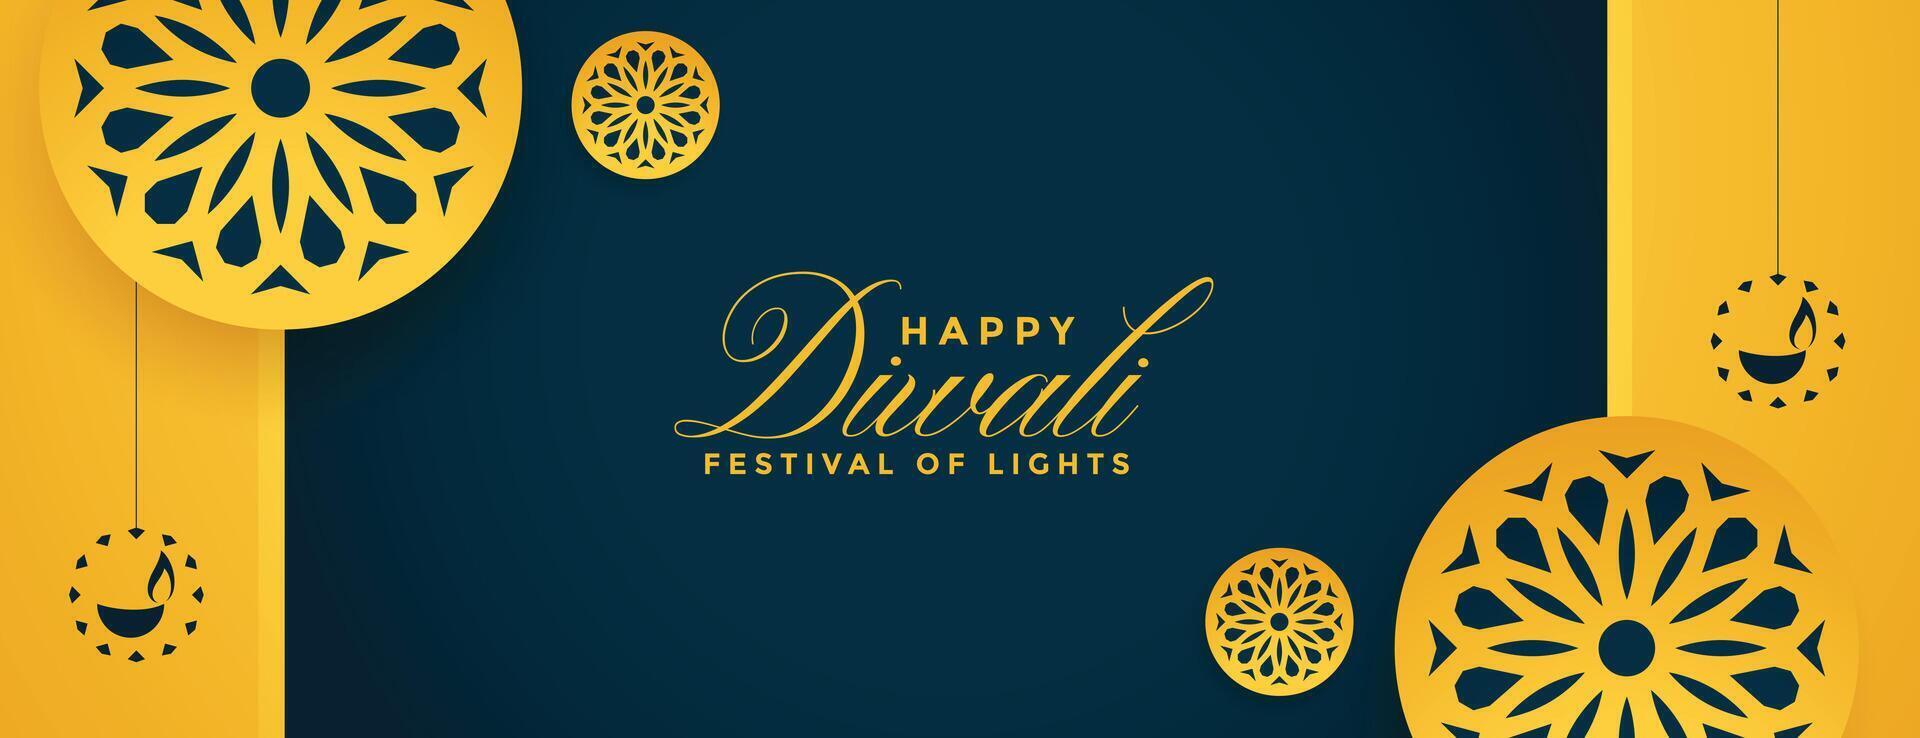 happy diwali yellow decorative banner design vector